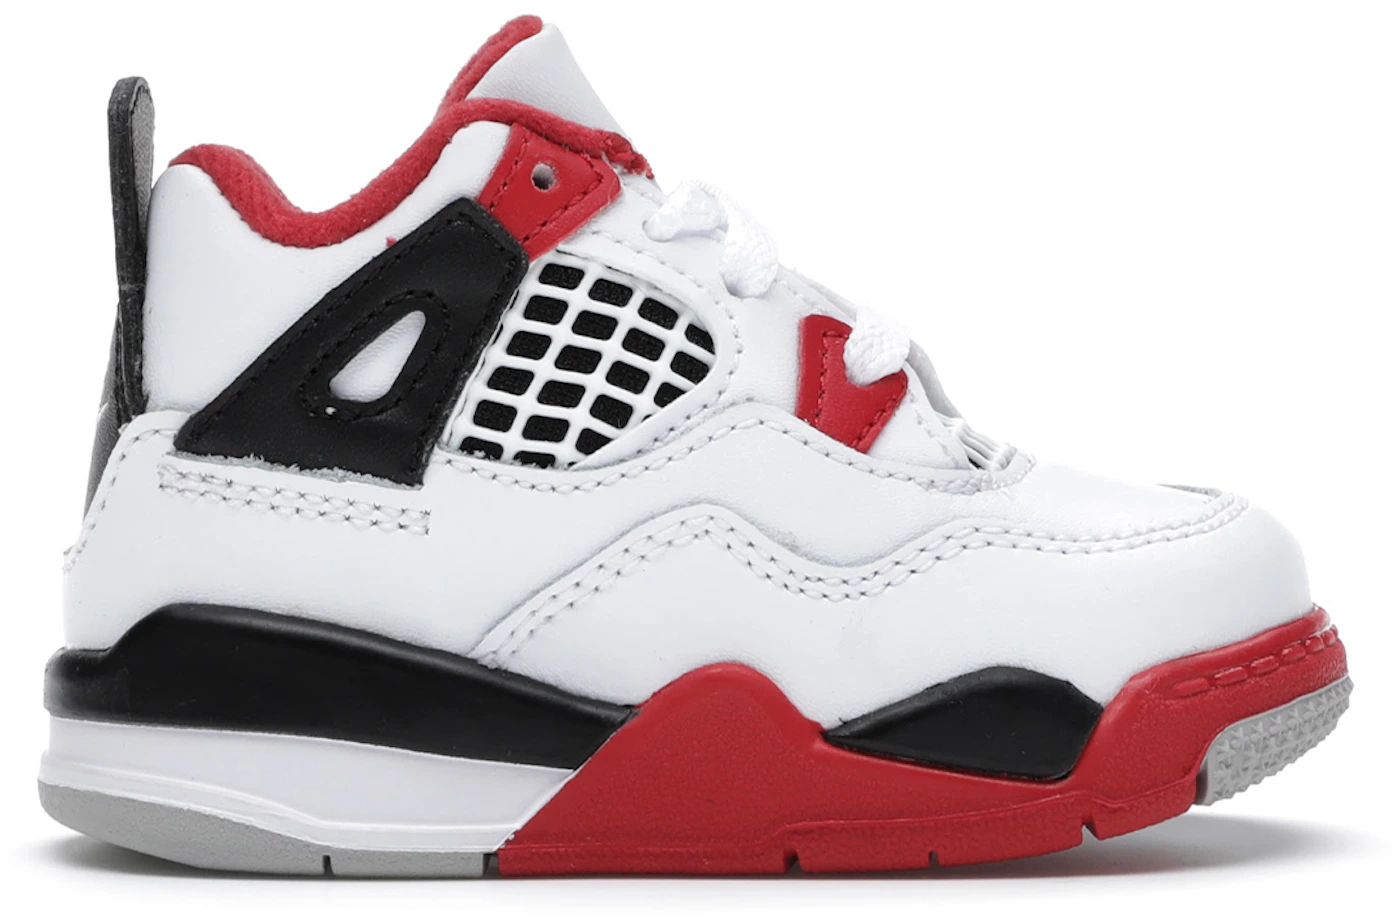  Jordan Baby's Shoes Nike Air 4 Retro OG (TD) Fire Red 2020  BQ7670-160 | Sneakers